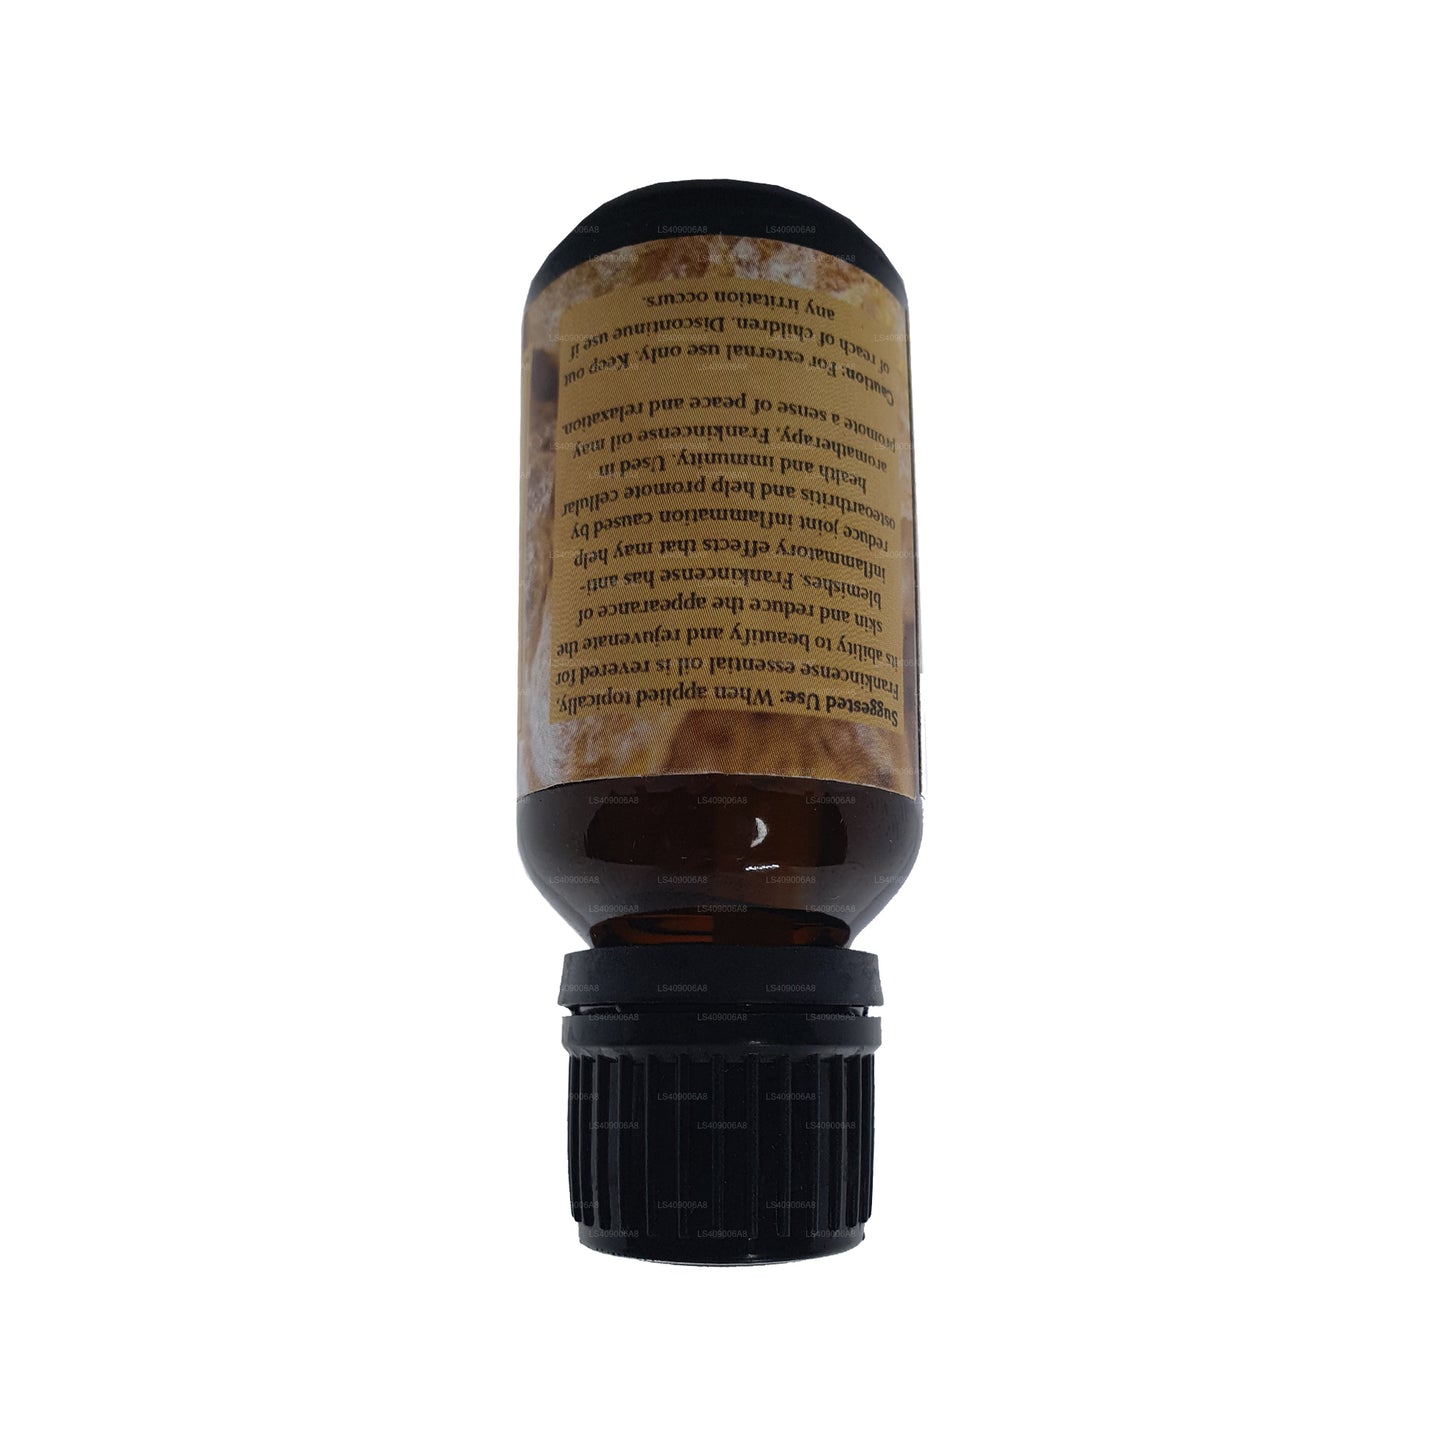 Lakpura Frankincense Essential Oil (15ml)